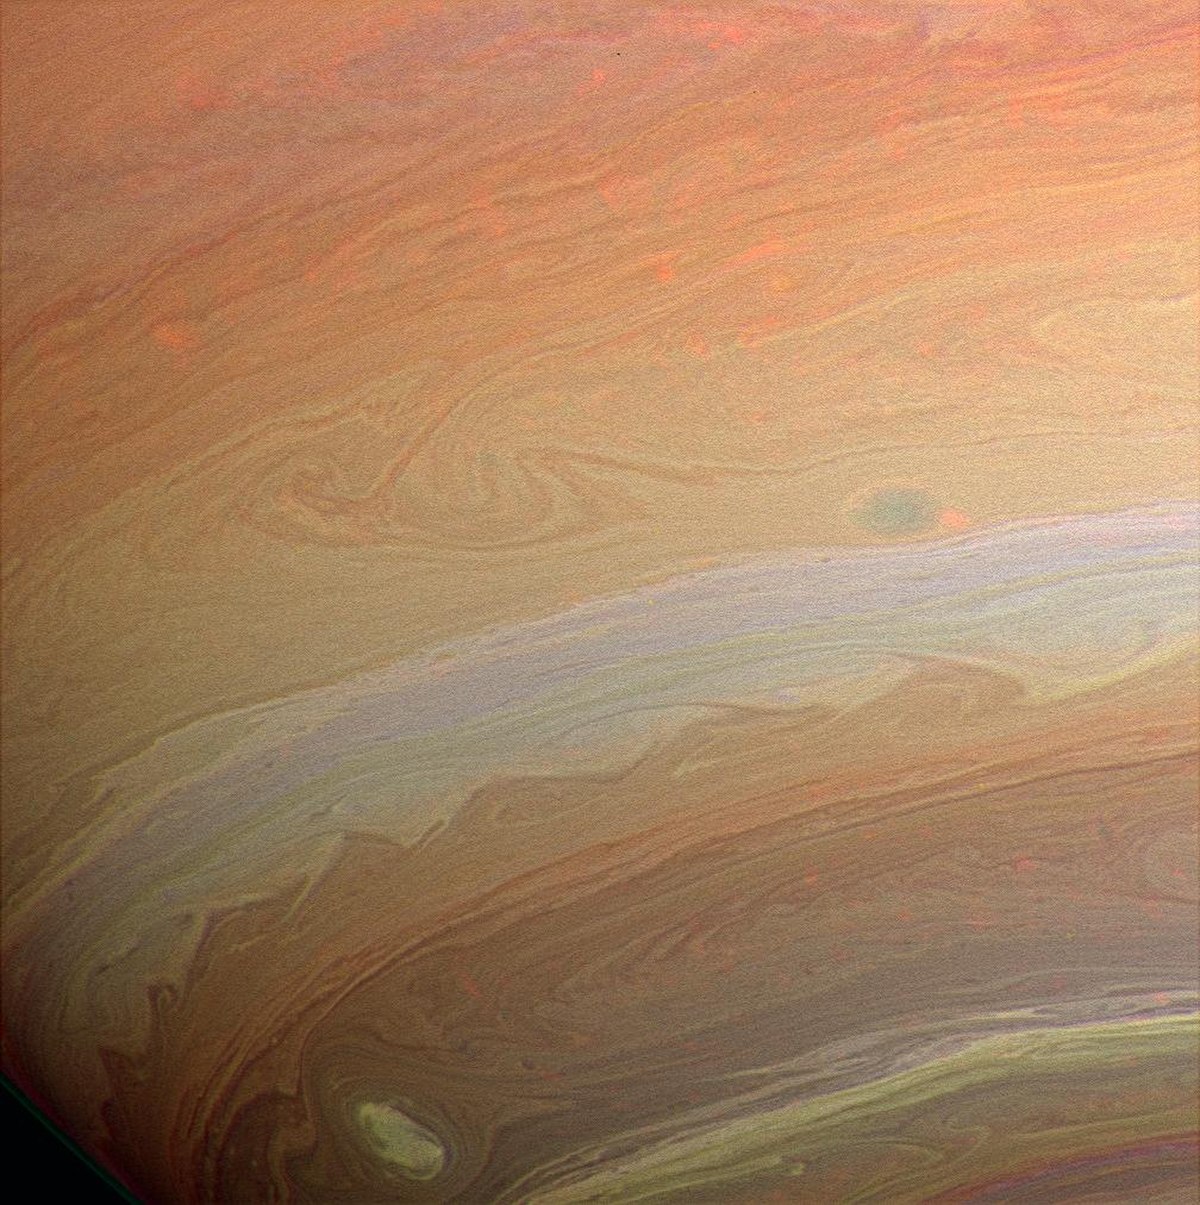 Atmosphère de Saturne